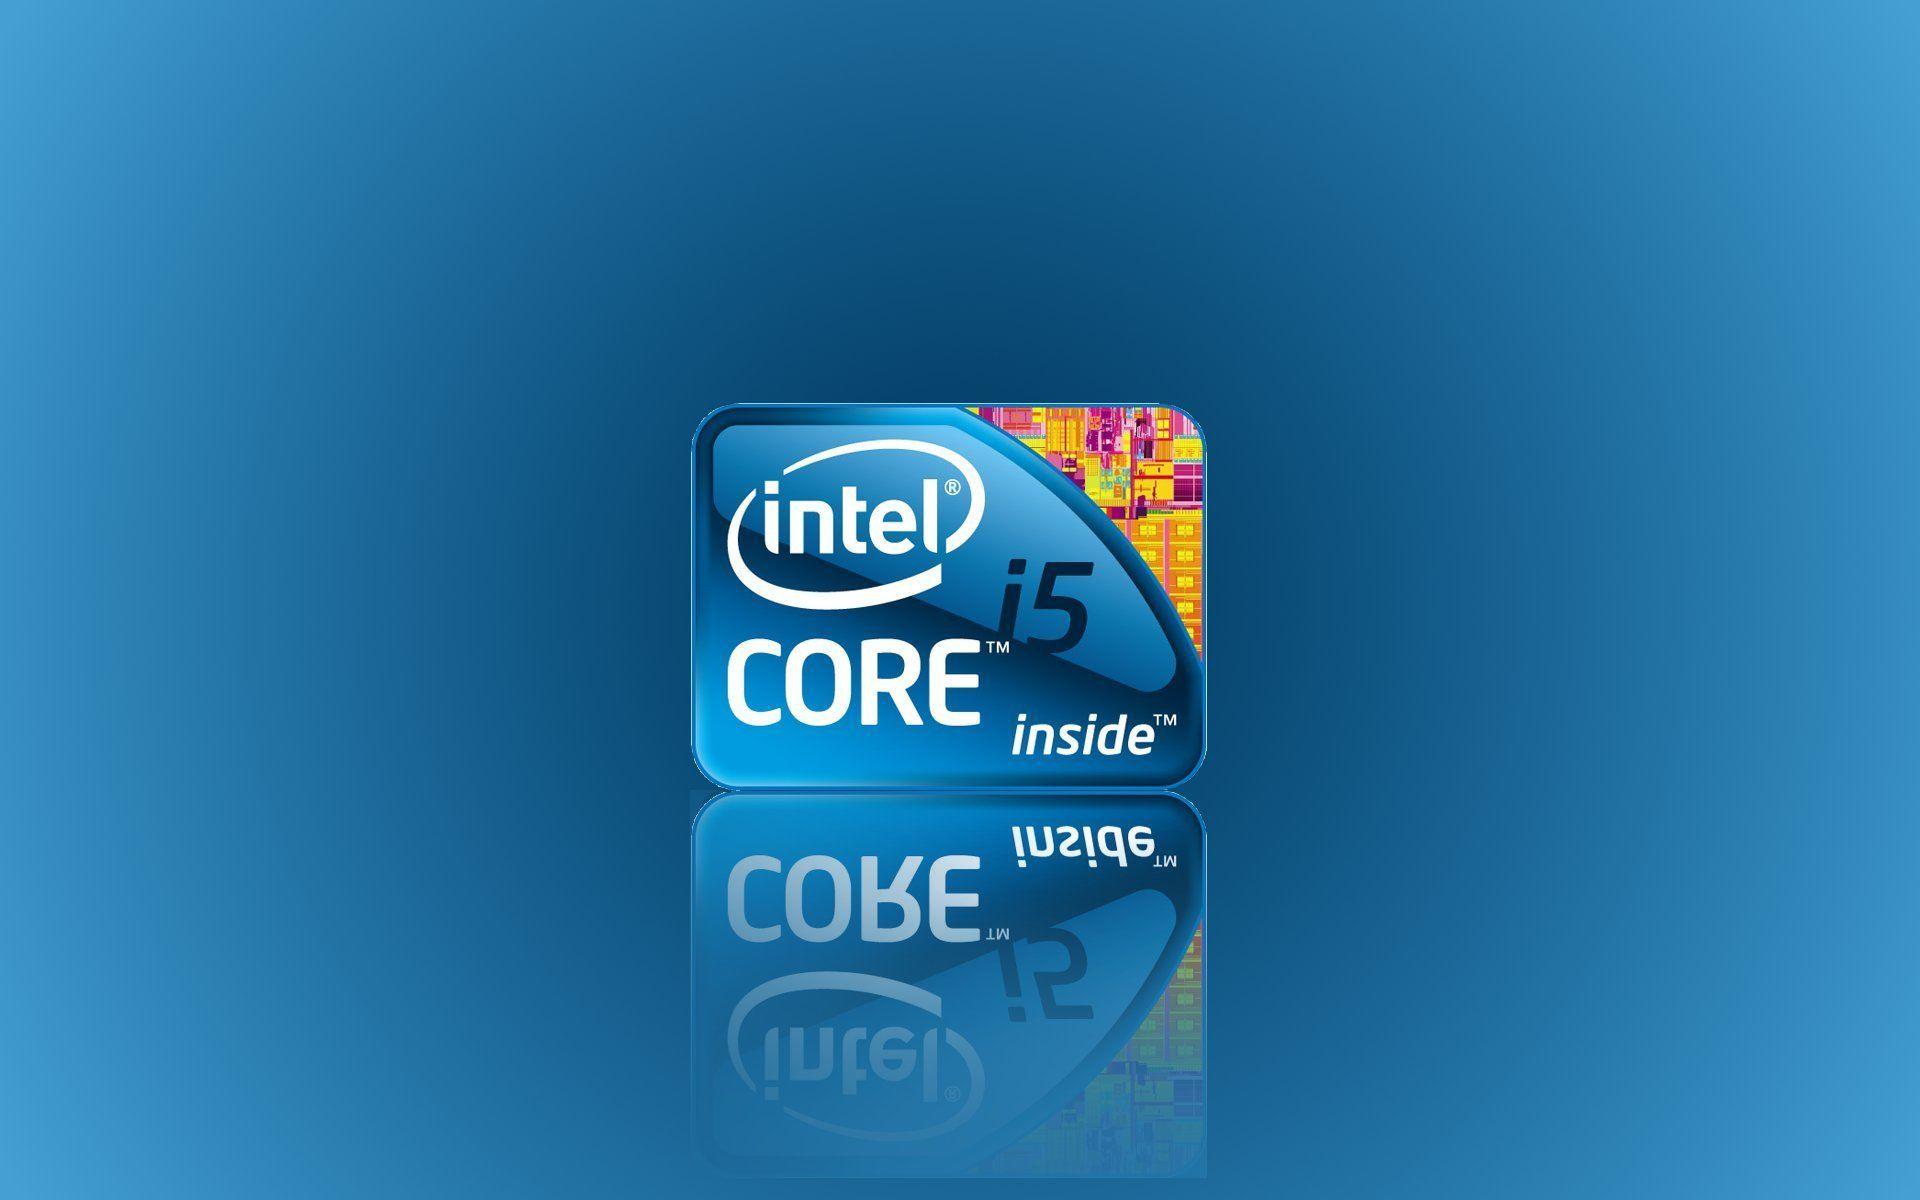 Intel Core I5 Wallpaper HD. Hdwidescreens